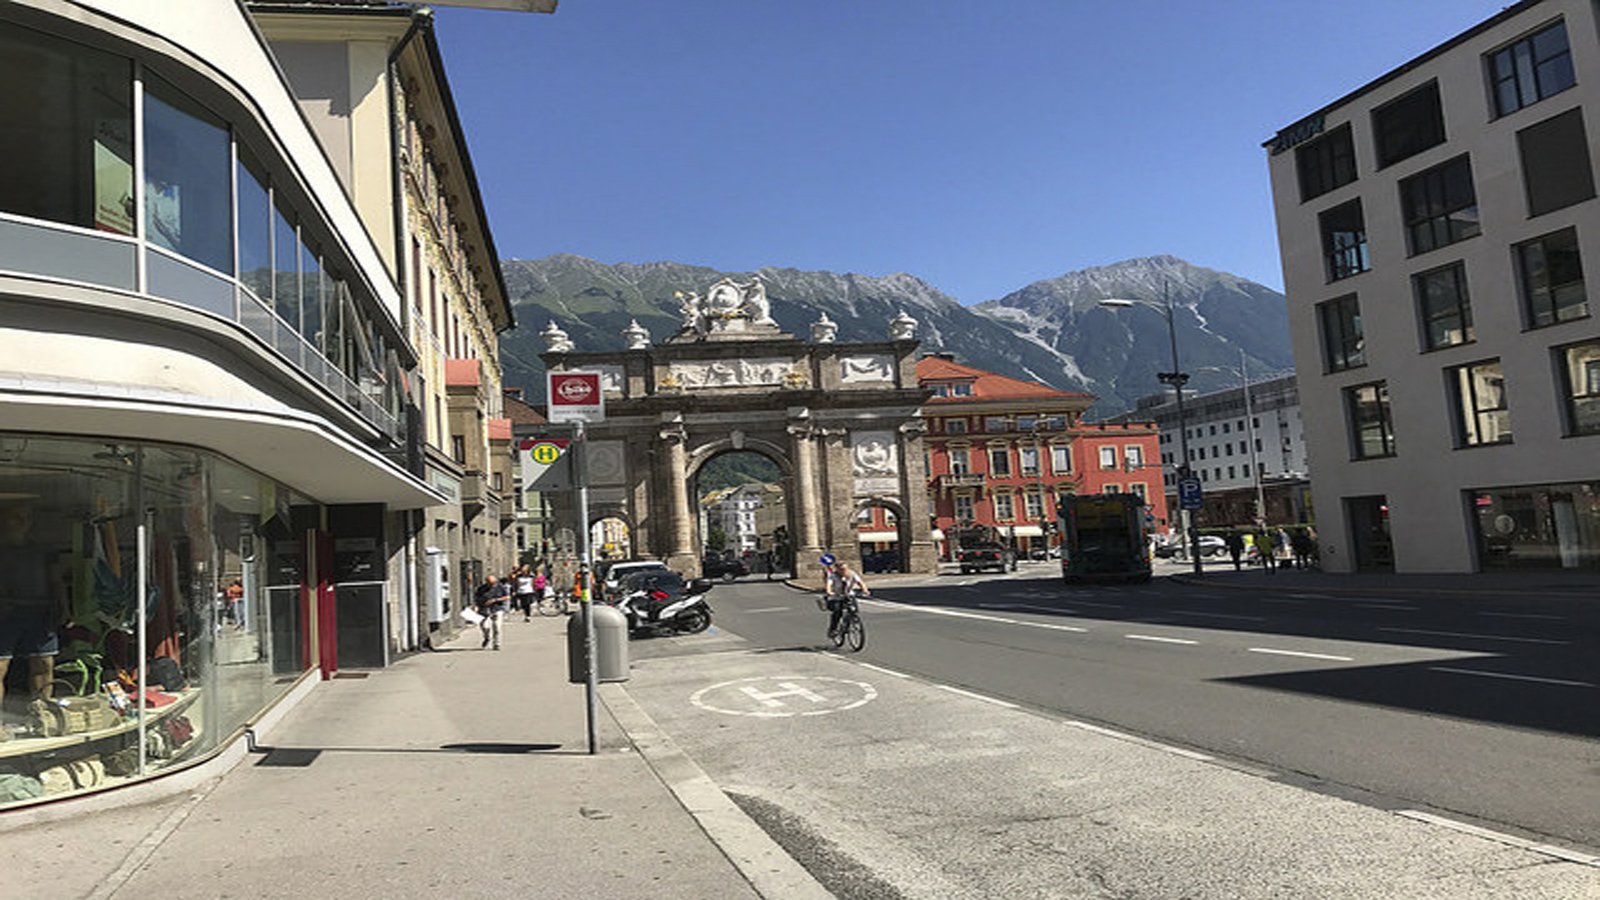 Salzburg July 6, 2017